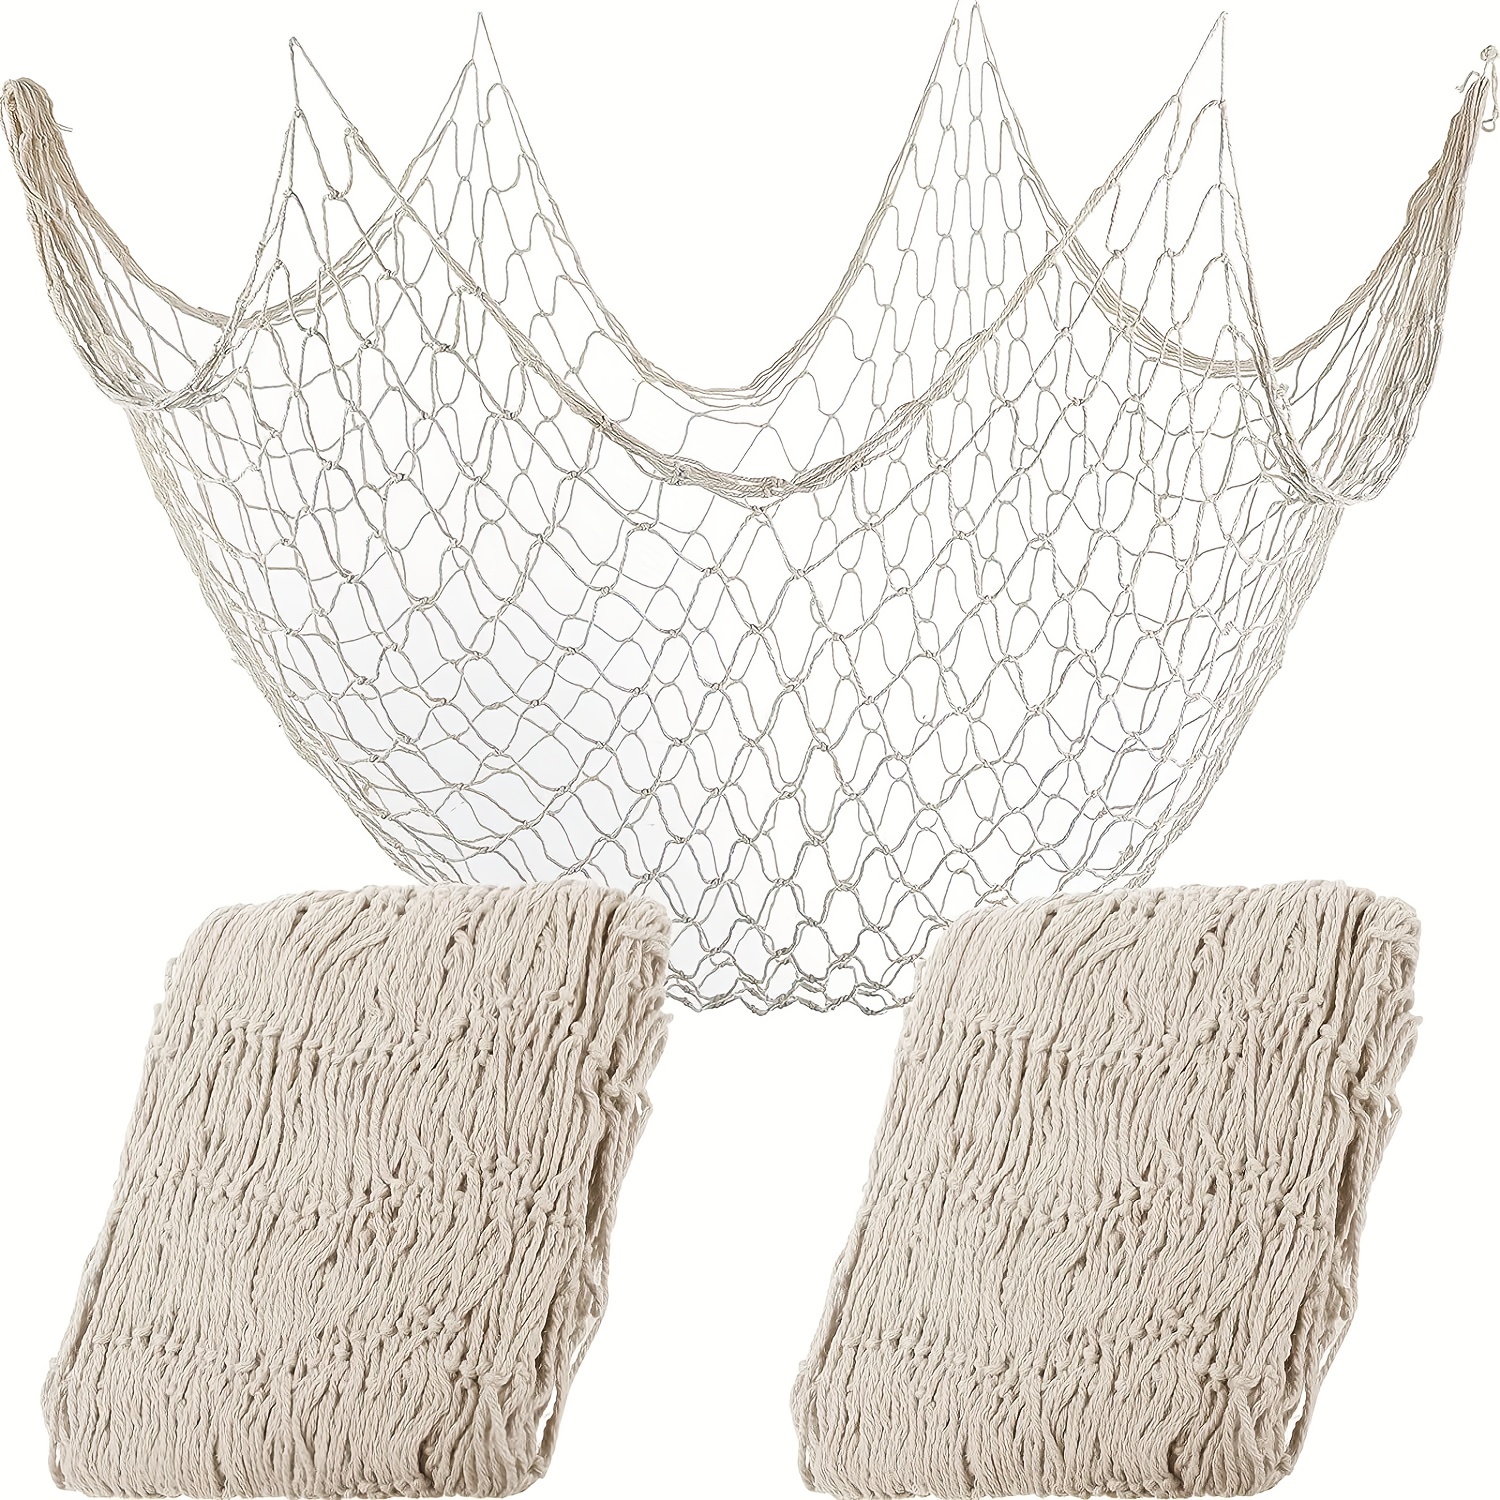 Bilipala Decorative Fish Netting, Fishing Net Decor, Ocean Pirate